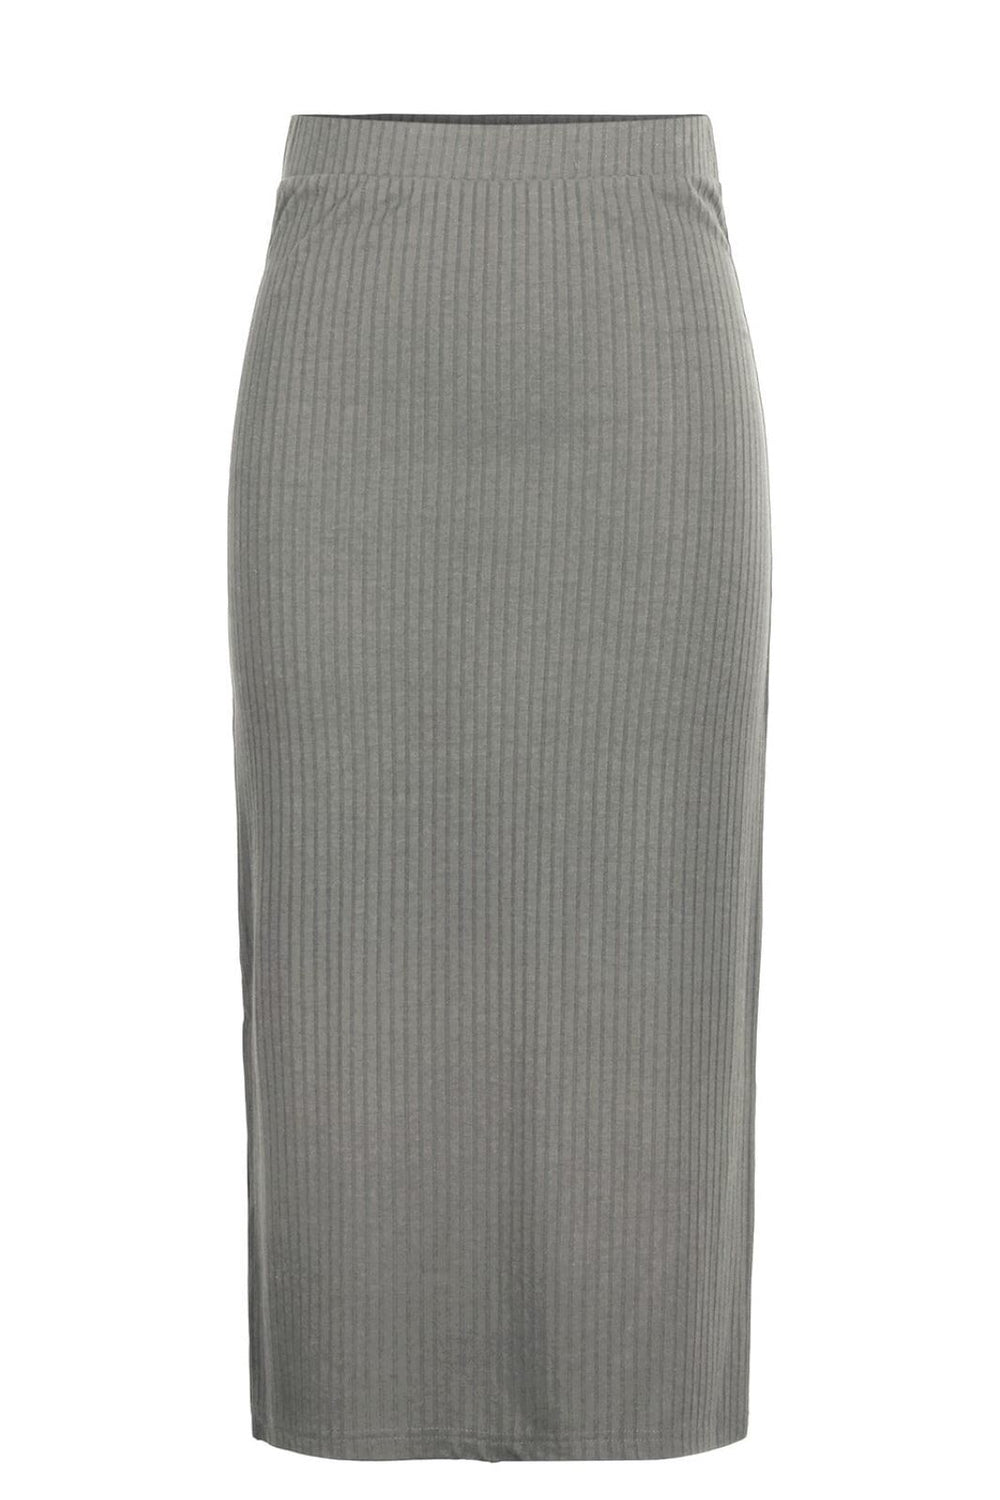 Pieces - Pckylie Midi Skirt - 3301046 Light Grey Melange Nederdele 